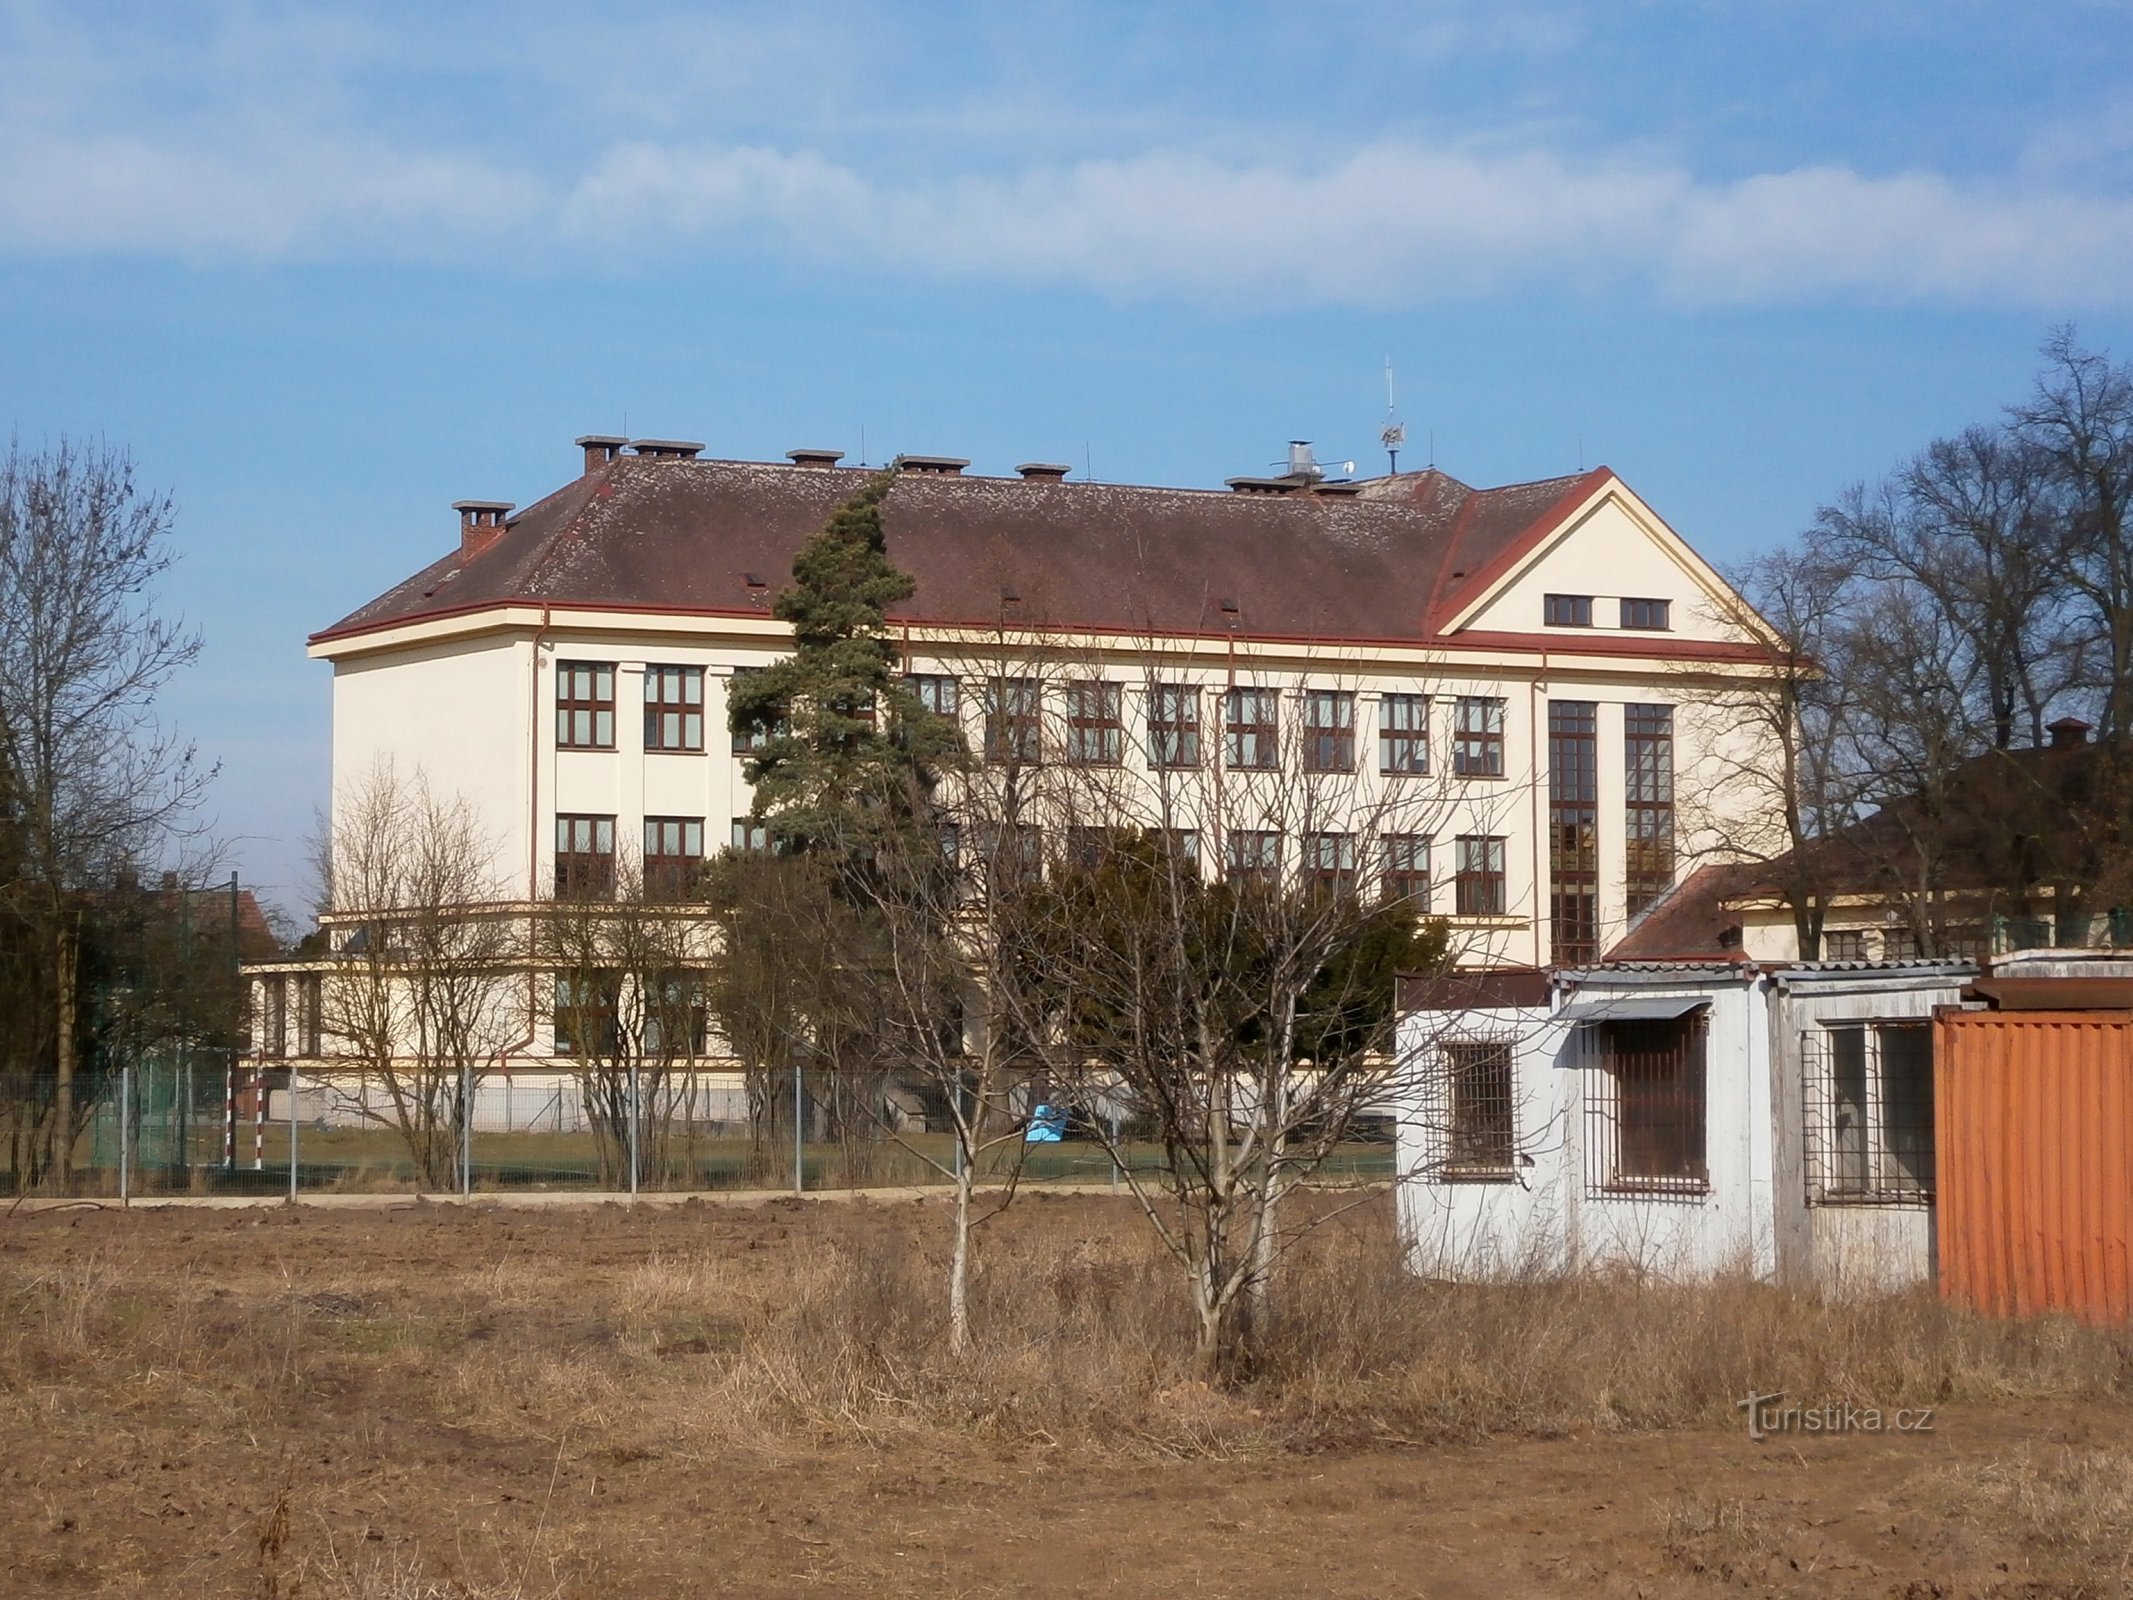 Trường tiểu học Masaryk ở Plotiště nad Labem (Hradec Králové, 9.3.2015/XNUMX/XNUMX)